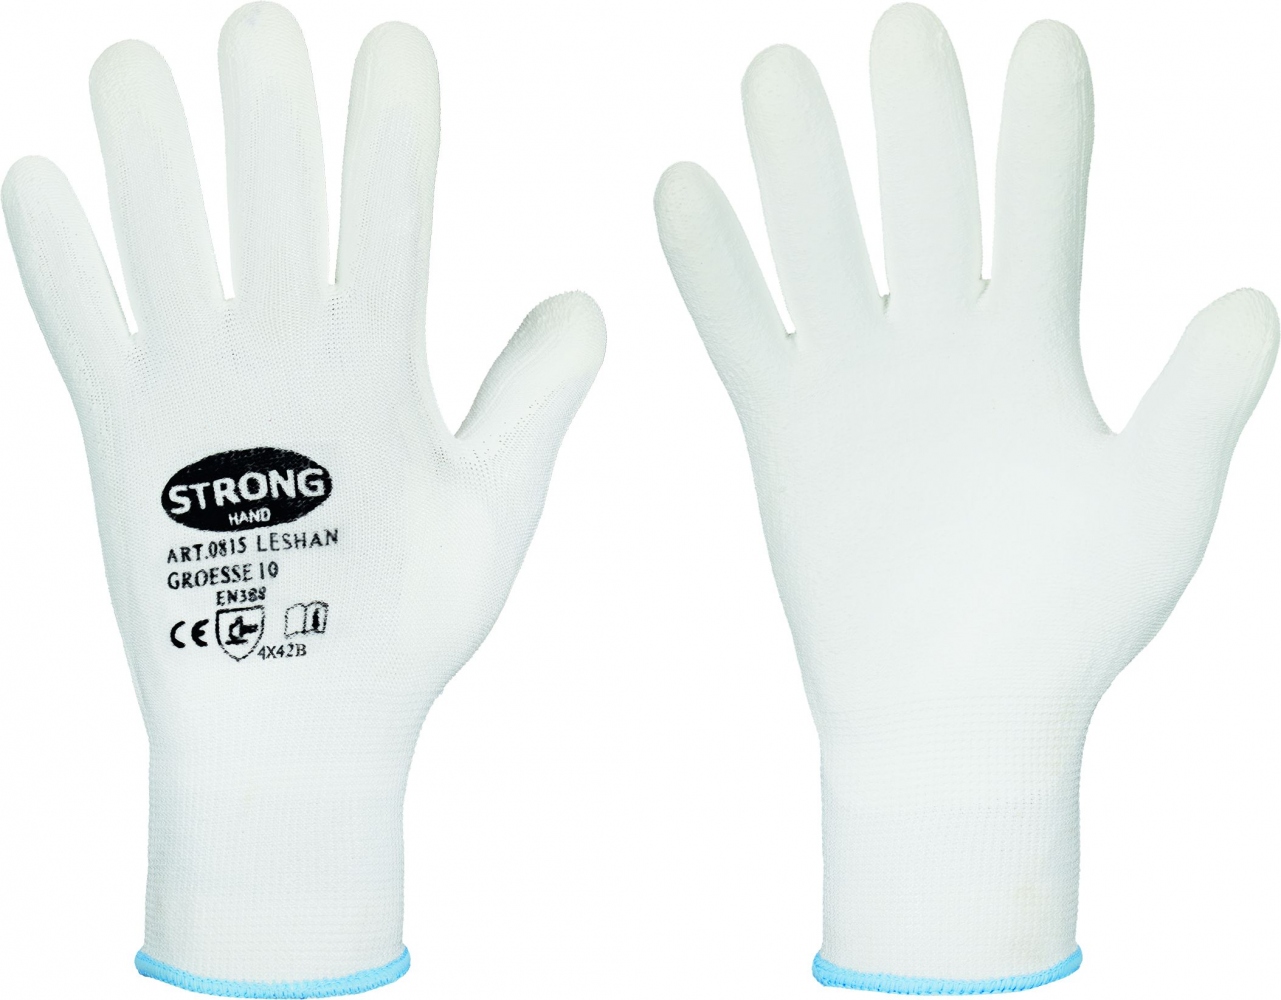 pics/Feldtmann 2016/Handschutz/neu 2021/stronghand-0815-leshan-pu-coated-cut-resistant-protective-gloves.jpg